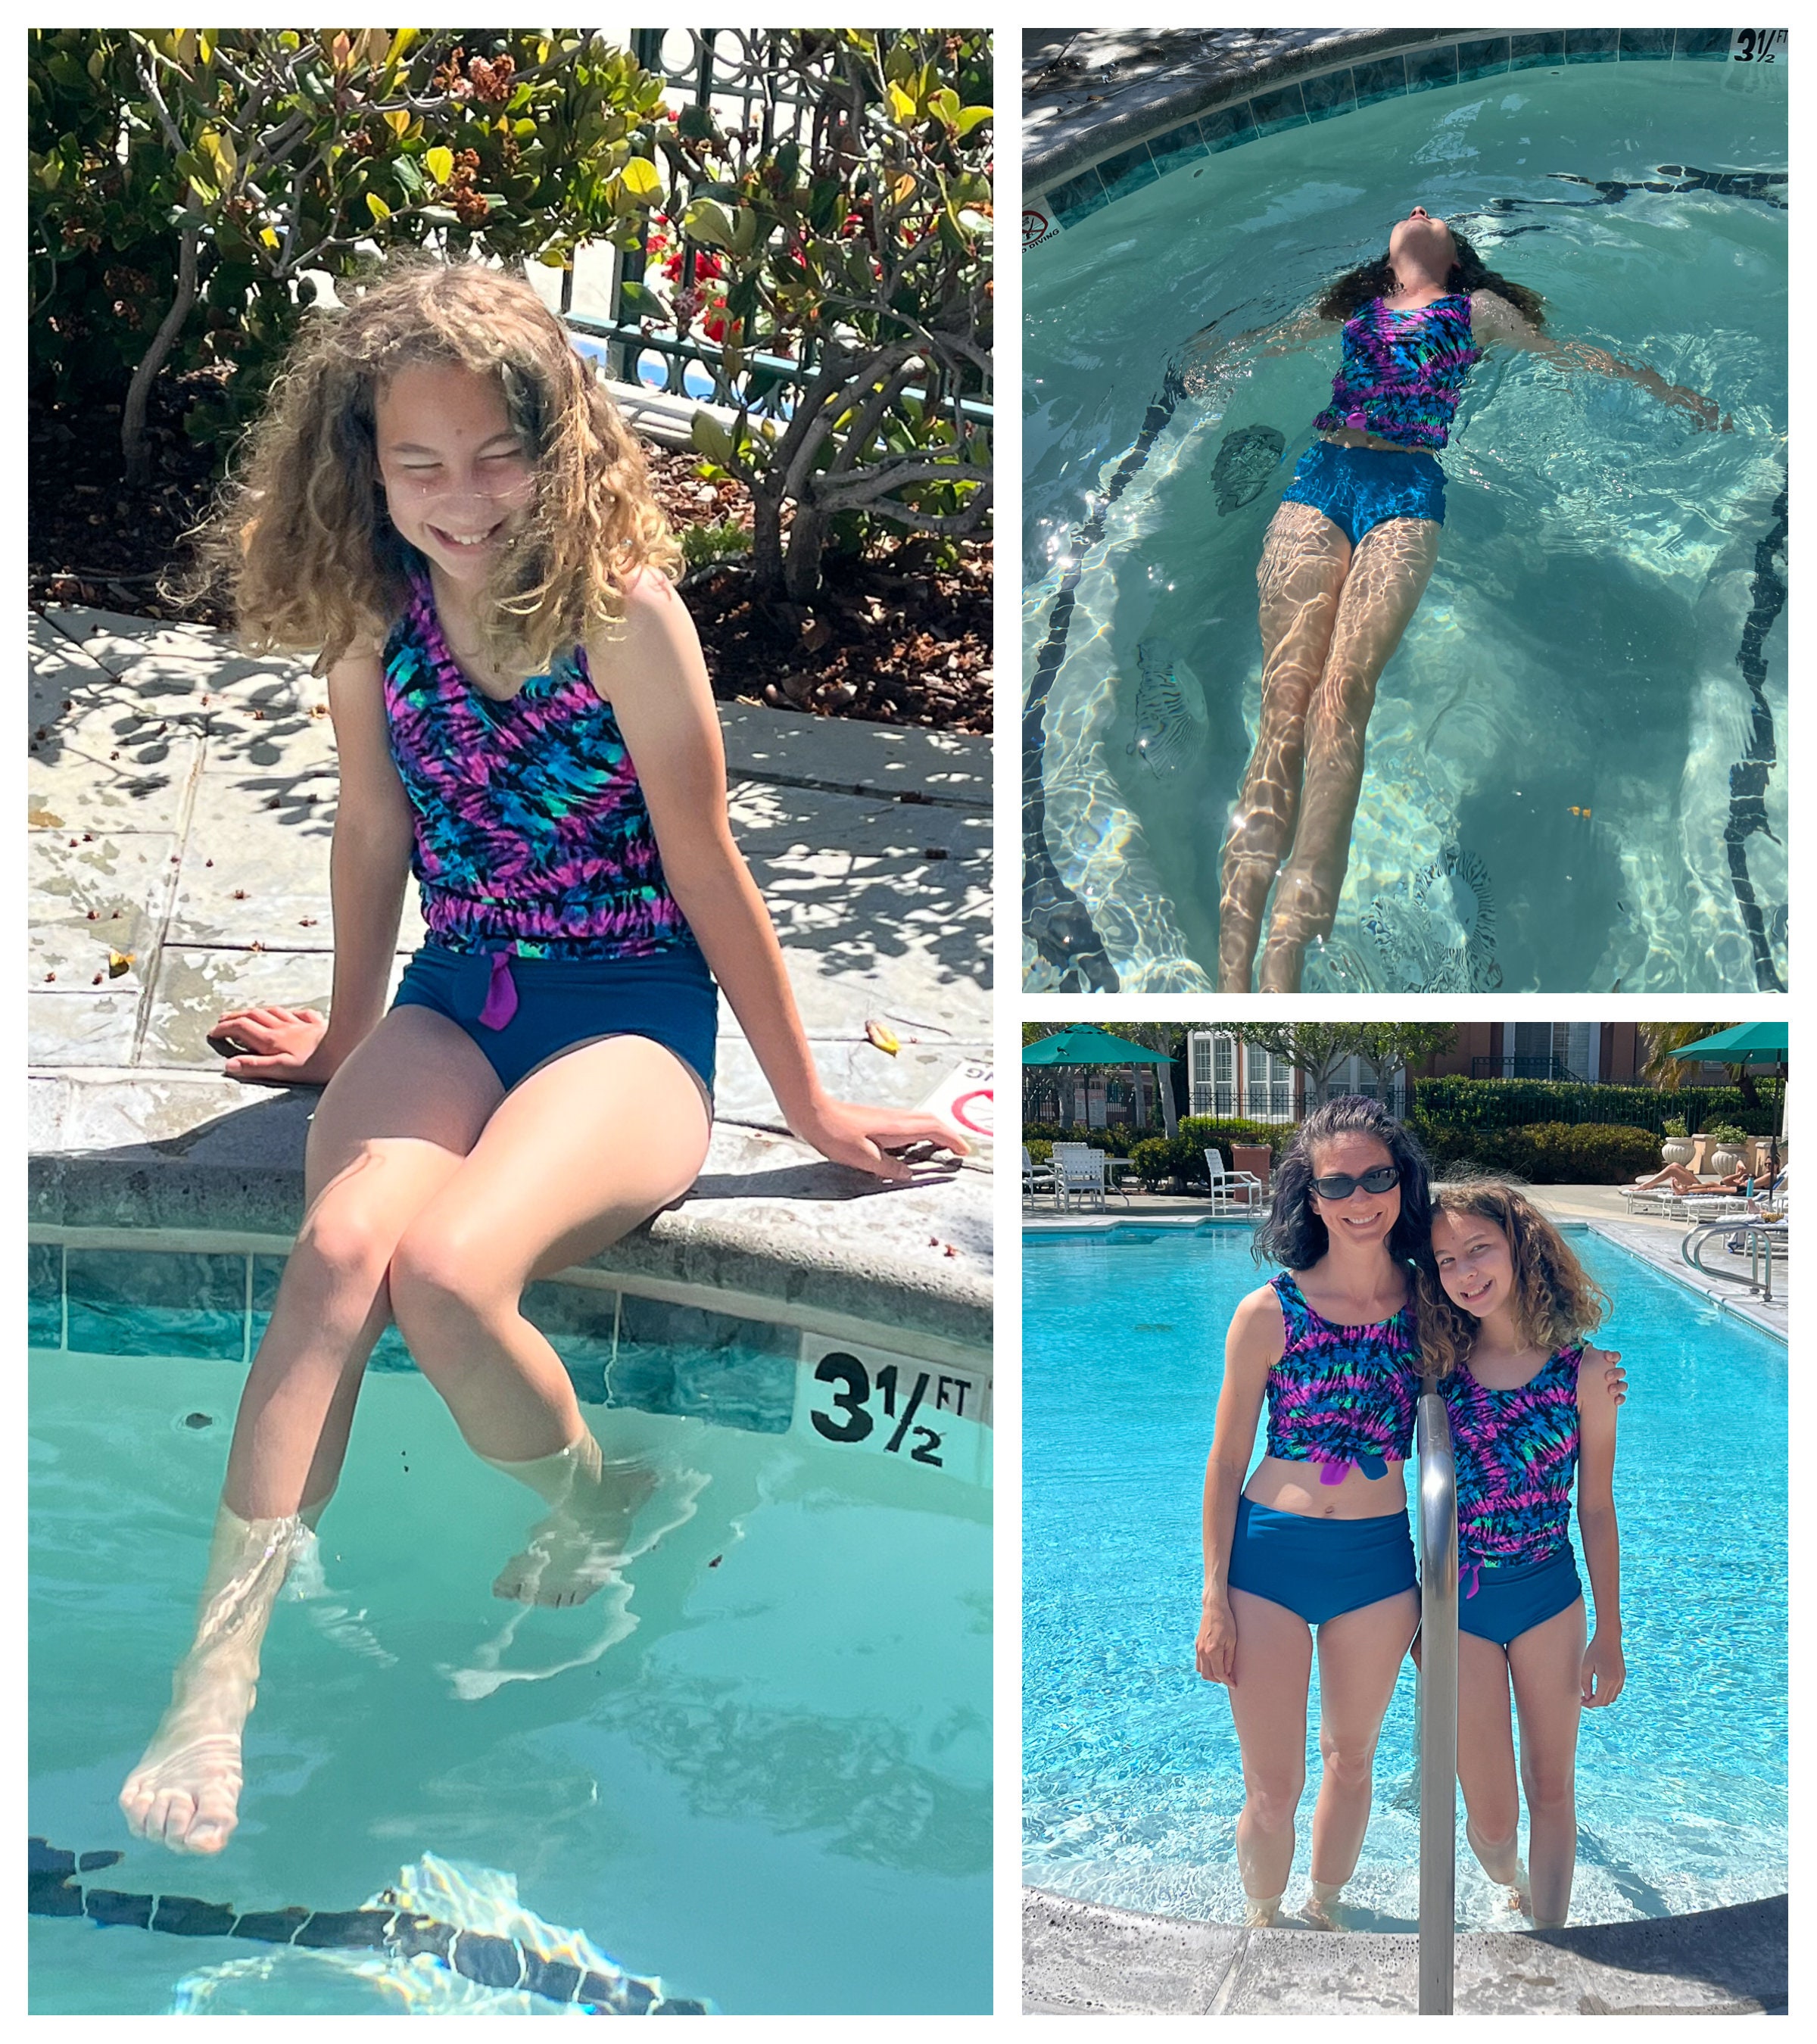 Blue Lagoon + Paradise Purple Reversible One-Piece Swimsuit – swoonswimwear